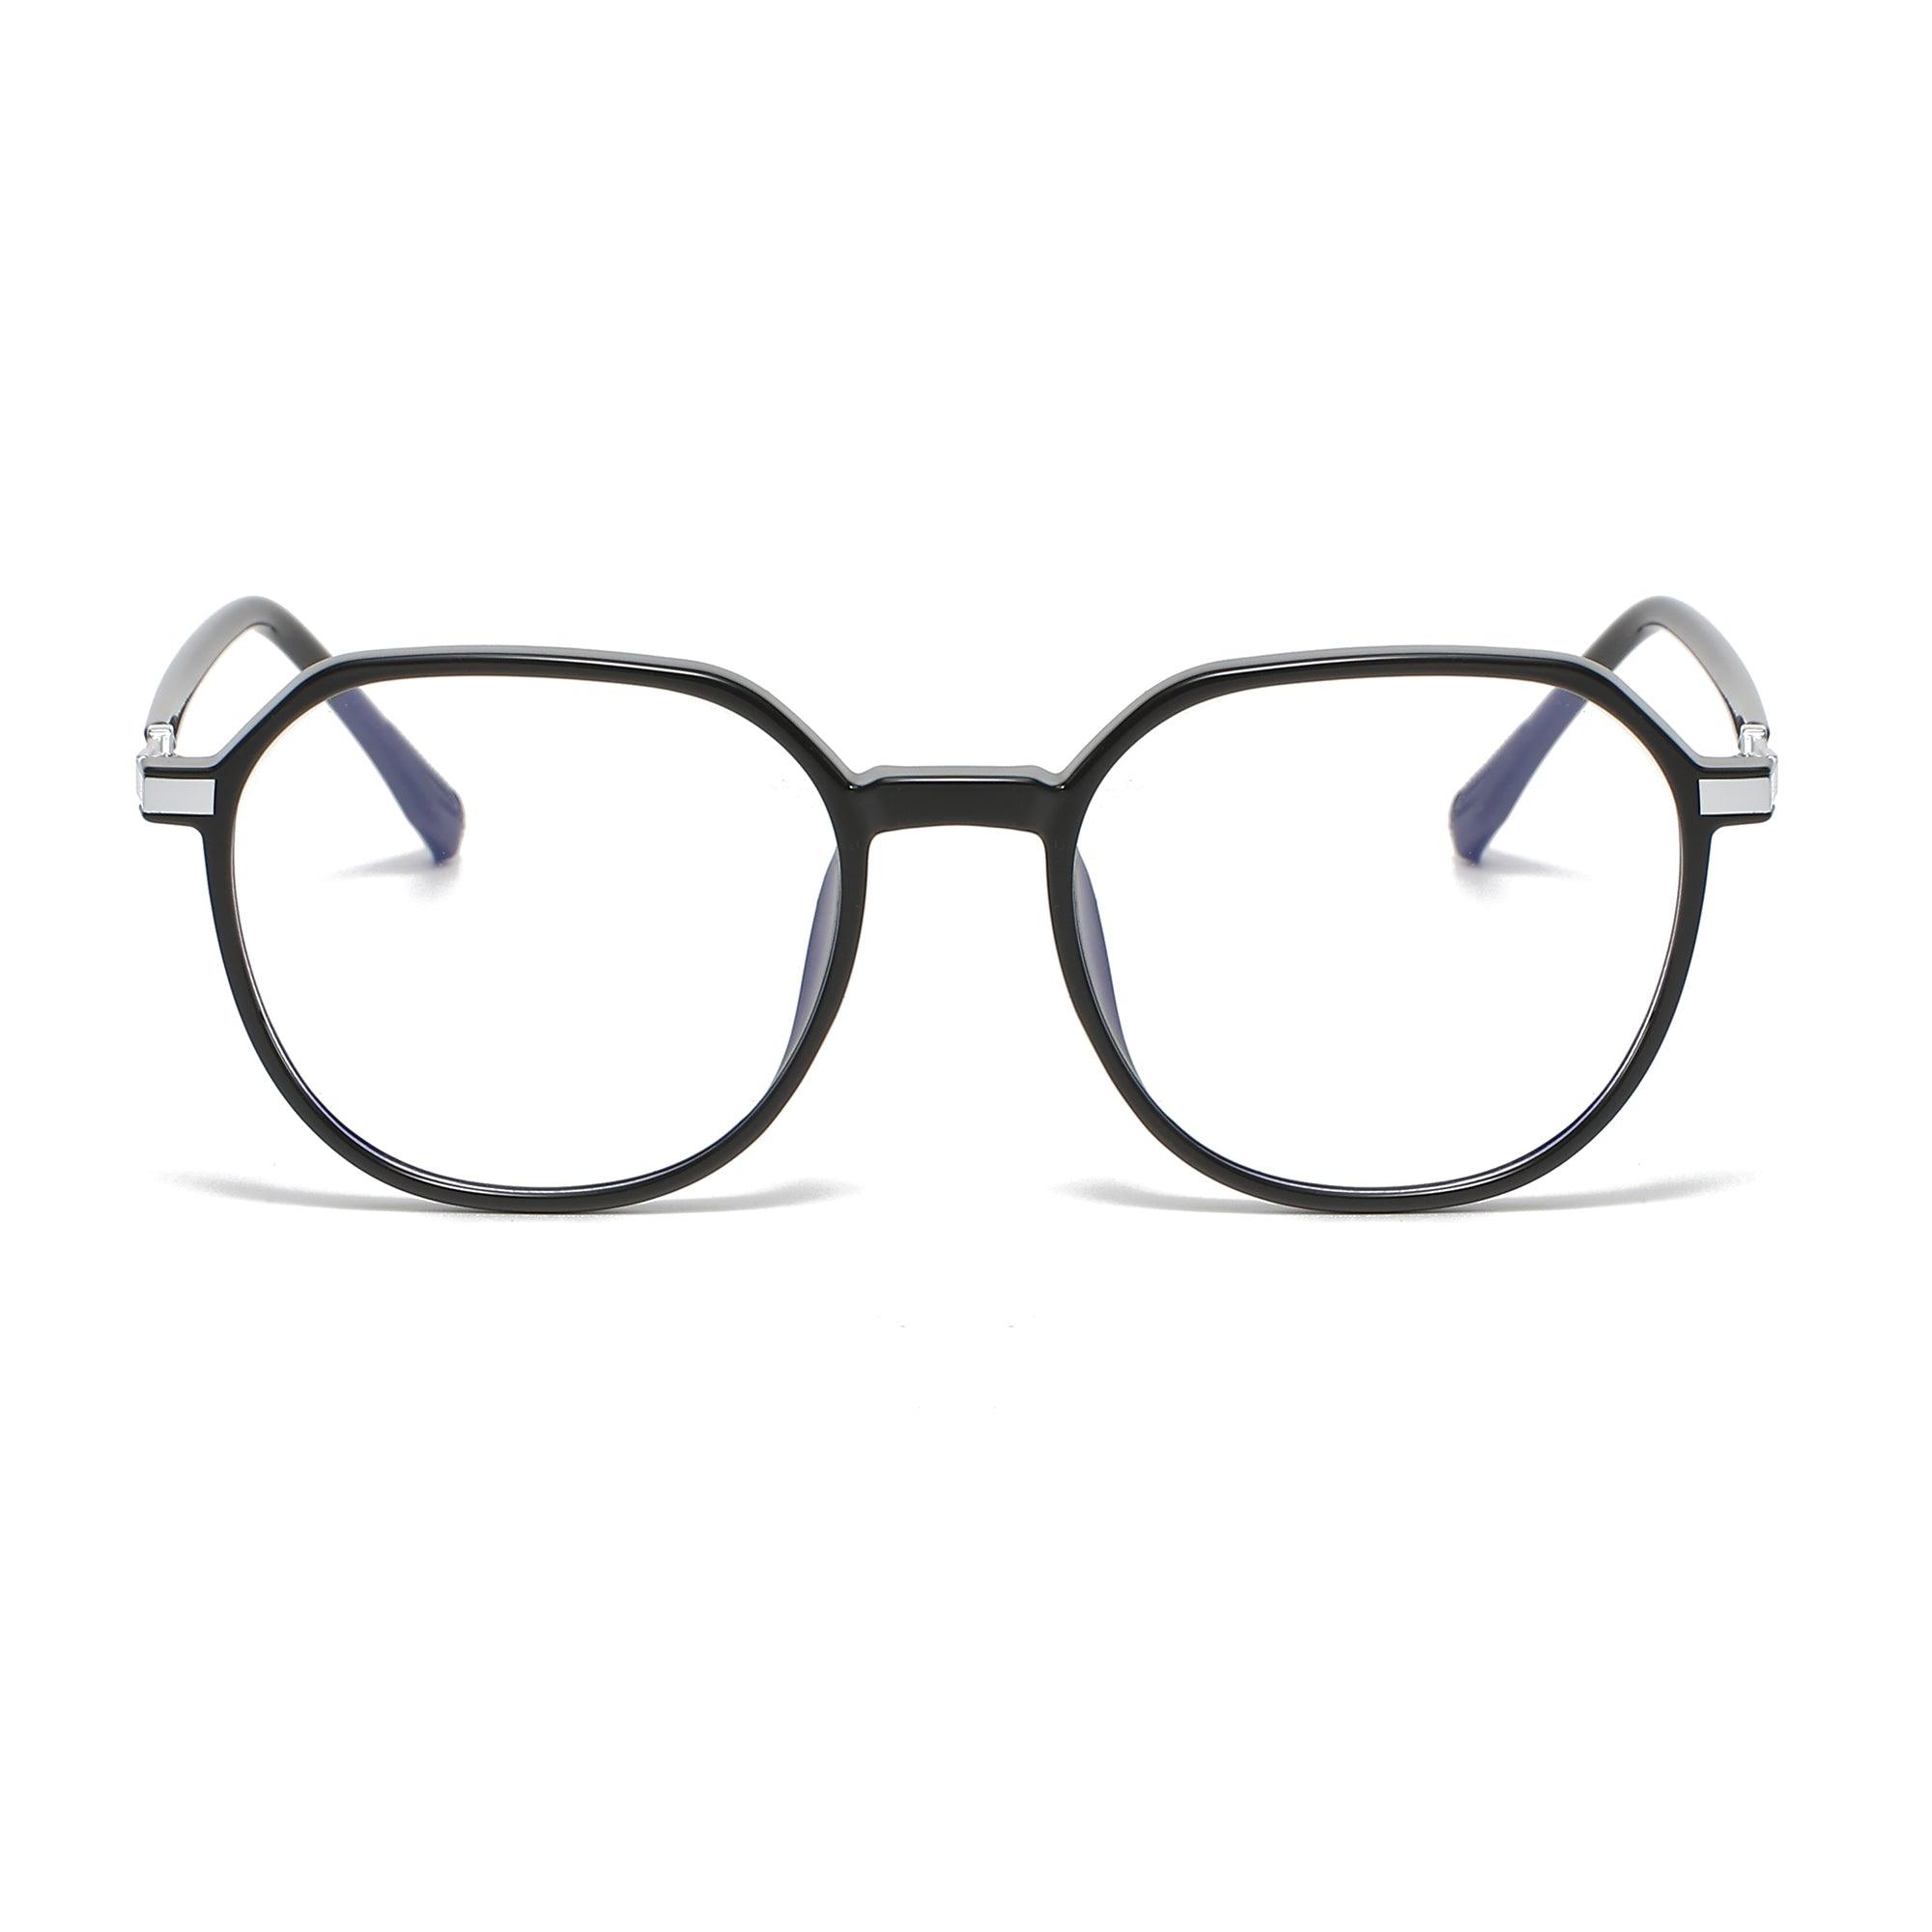 Nkemdilim TR90 Square Eyeglasses – Prime Particle